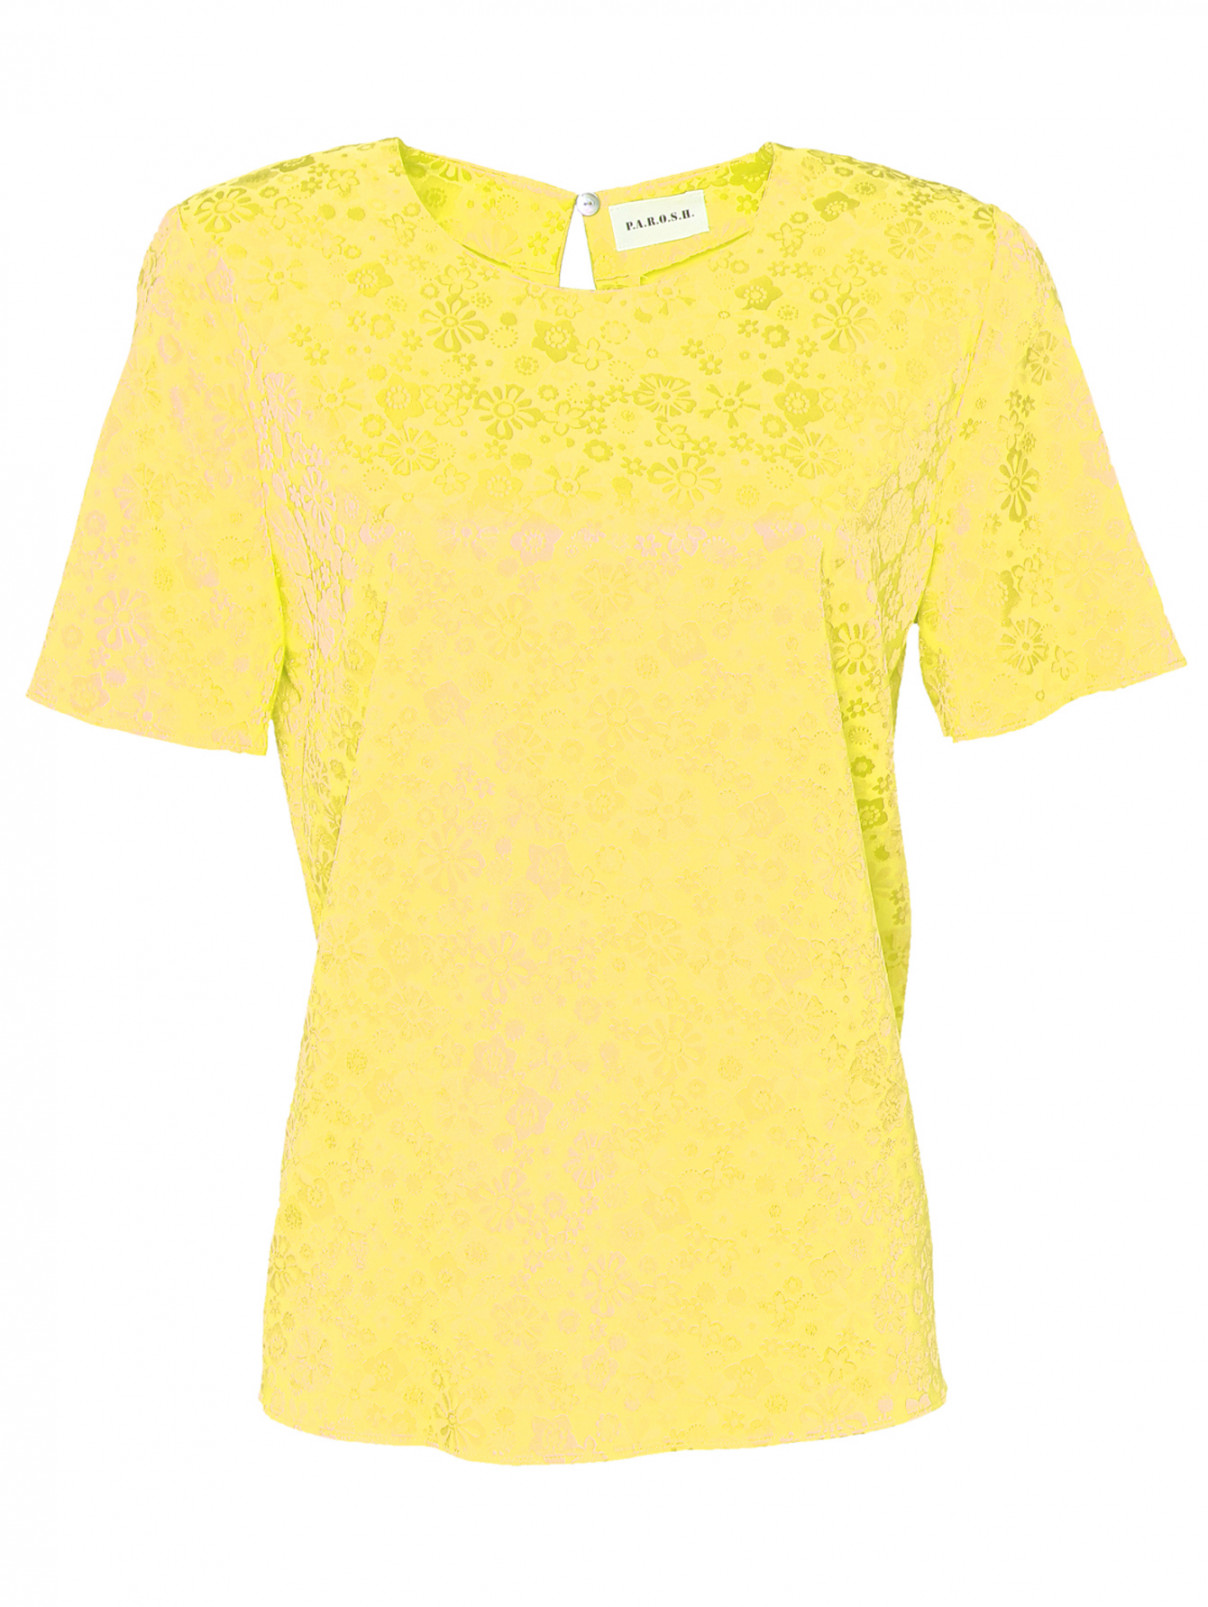 Блуза с коротким рукавом P.A.R.O.S.H.  –  Общий вид  – Цвет:  Желтый